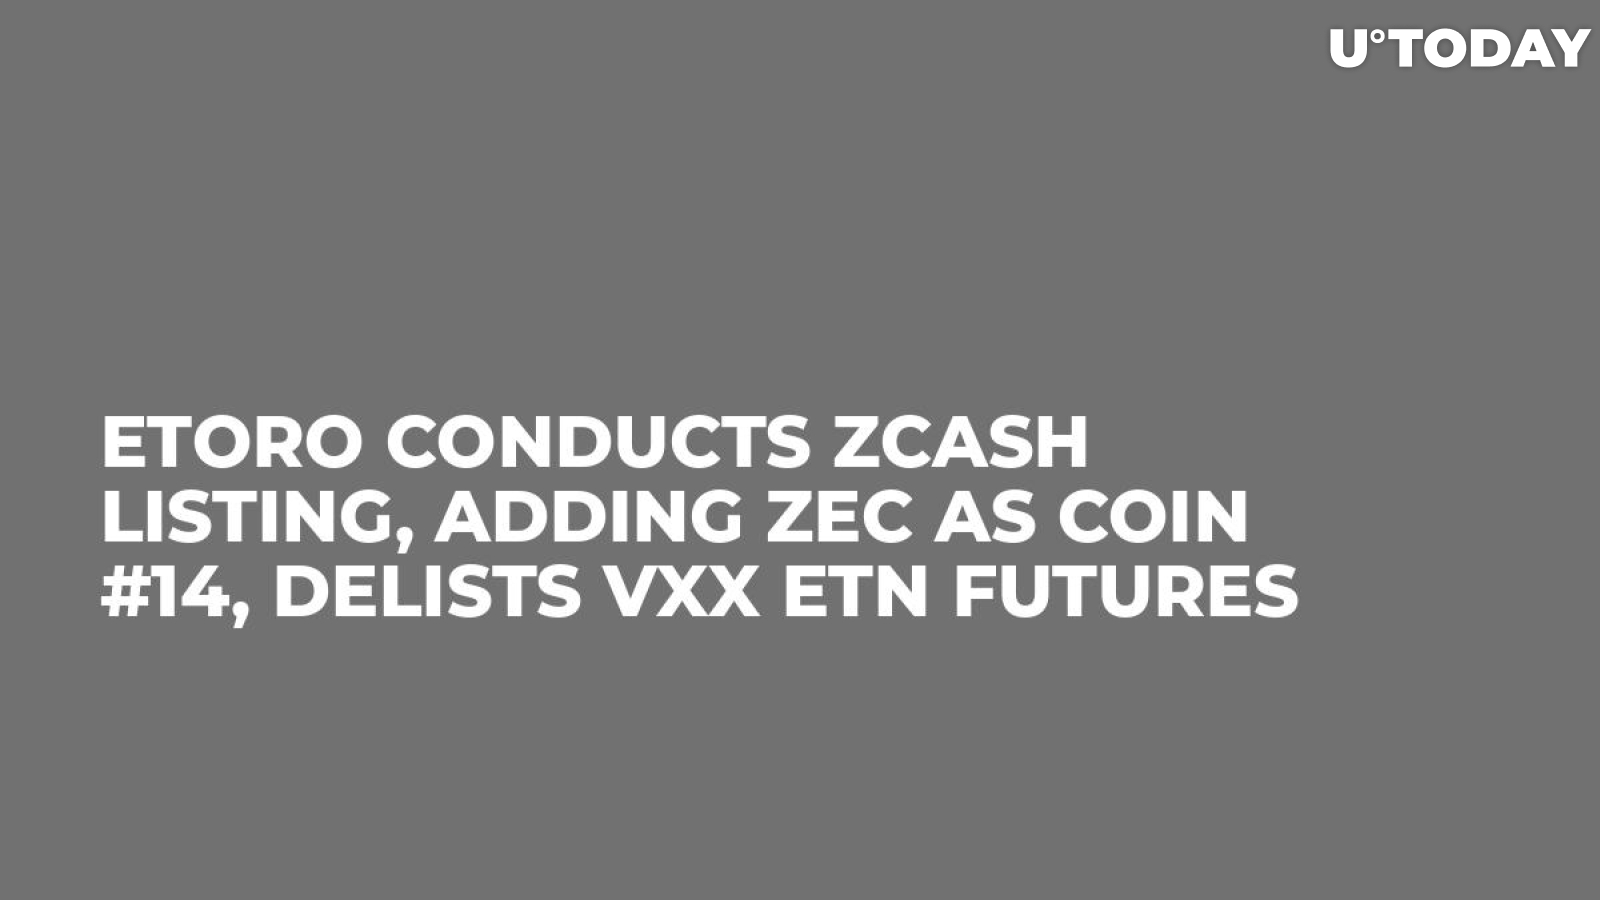 eToro Conducts ZCash Listing, Adding ZEC as Coin #14, Delists VXX ETN Futures